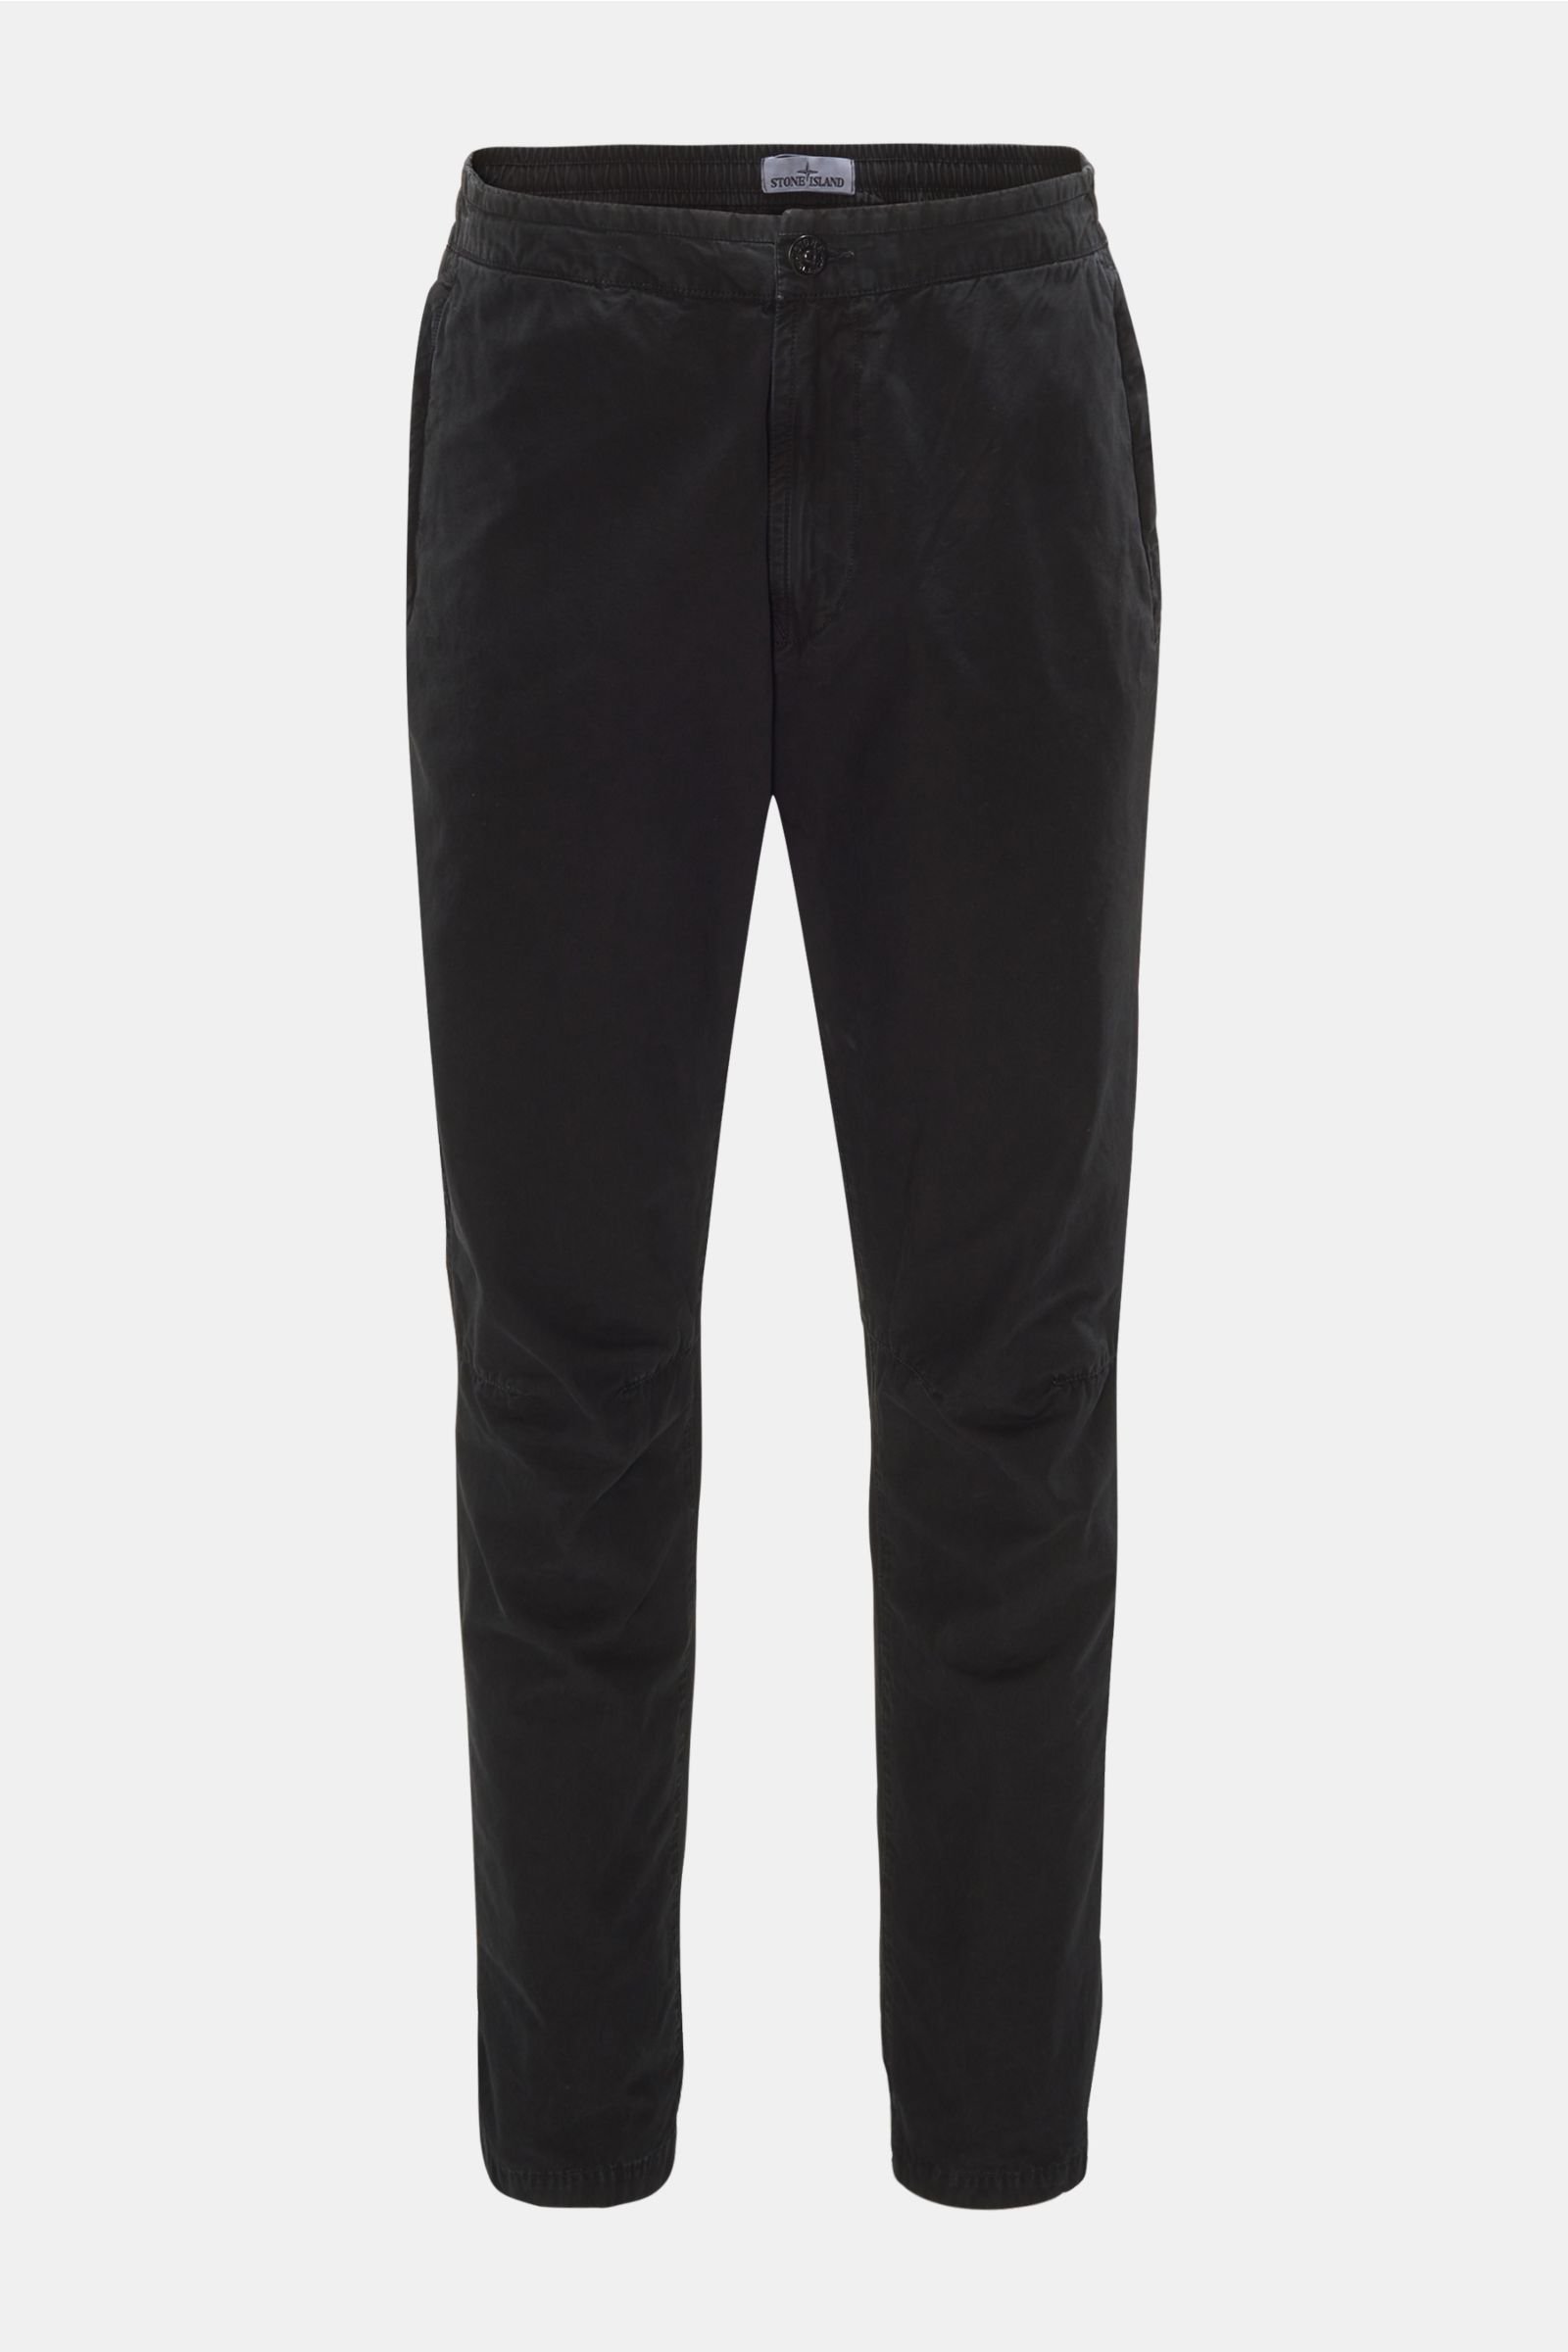 Cotton jogger pants black